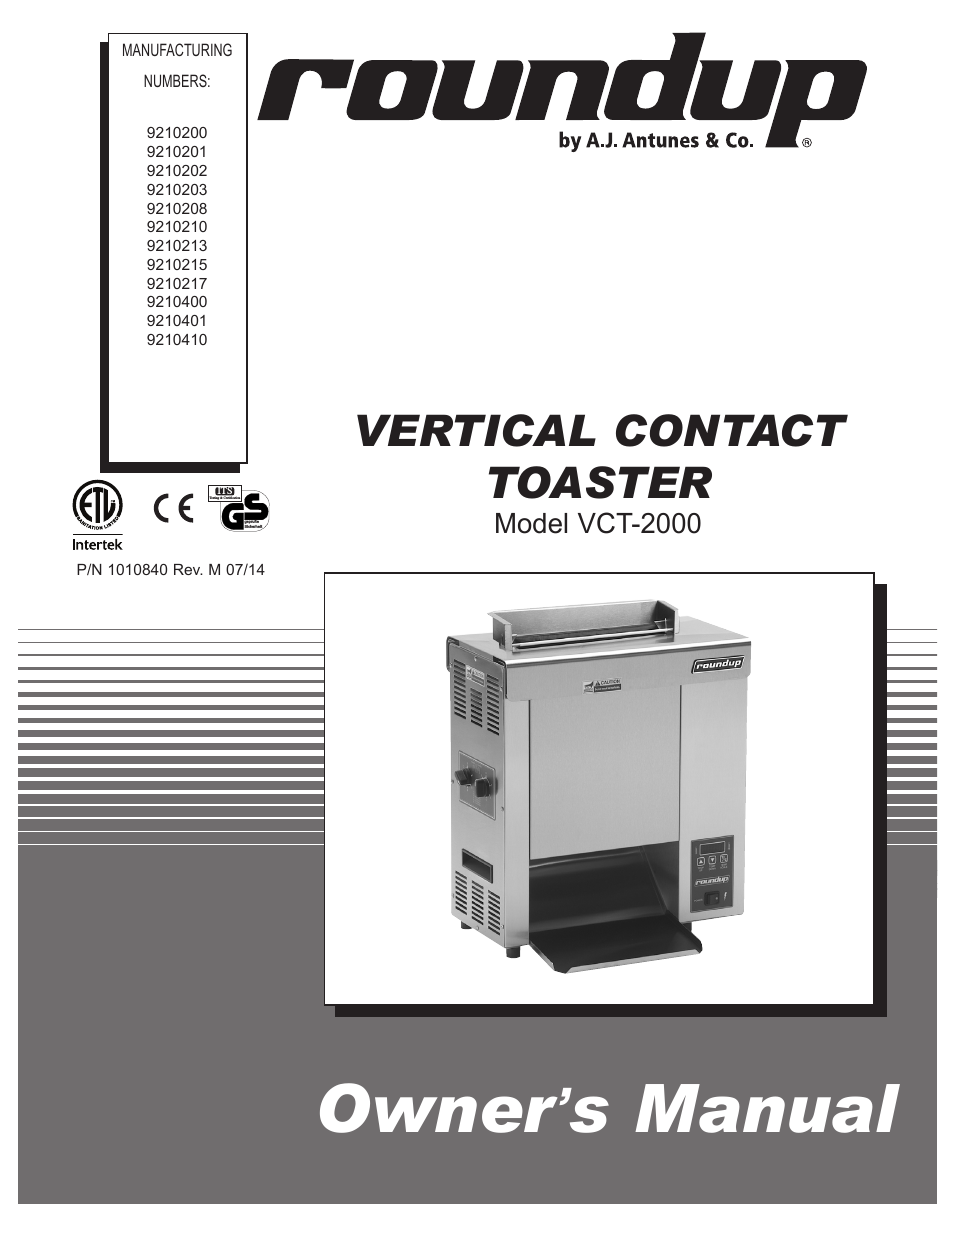 VCT-2000 9210410